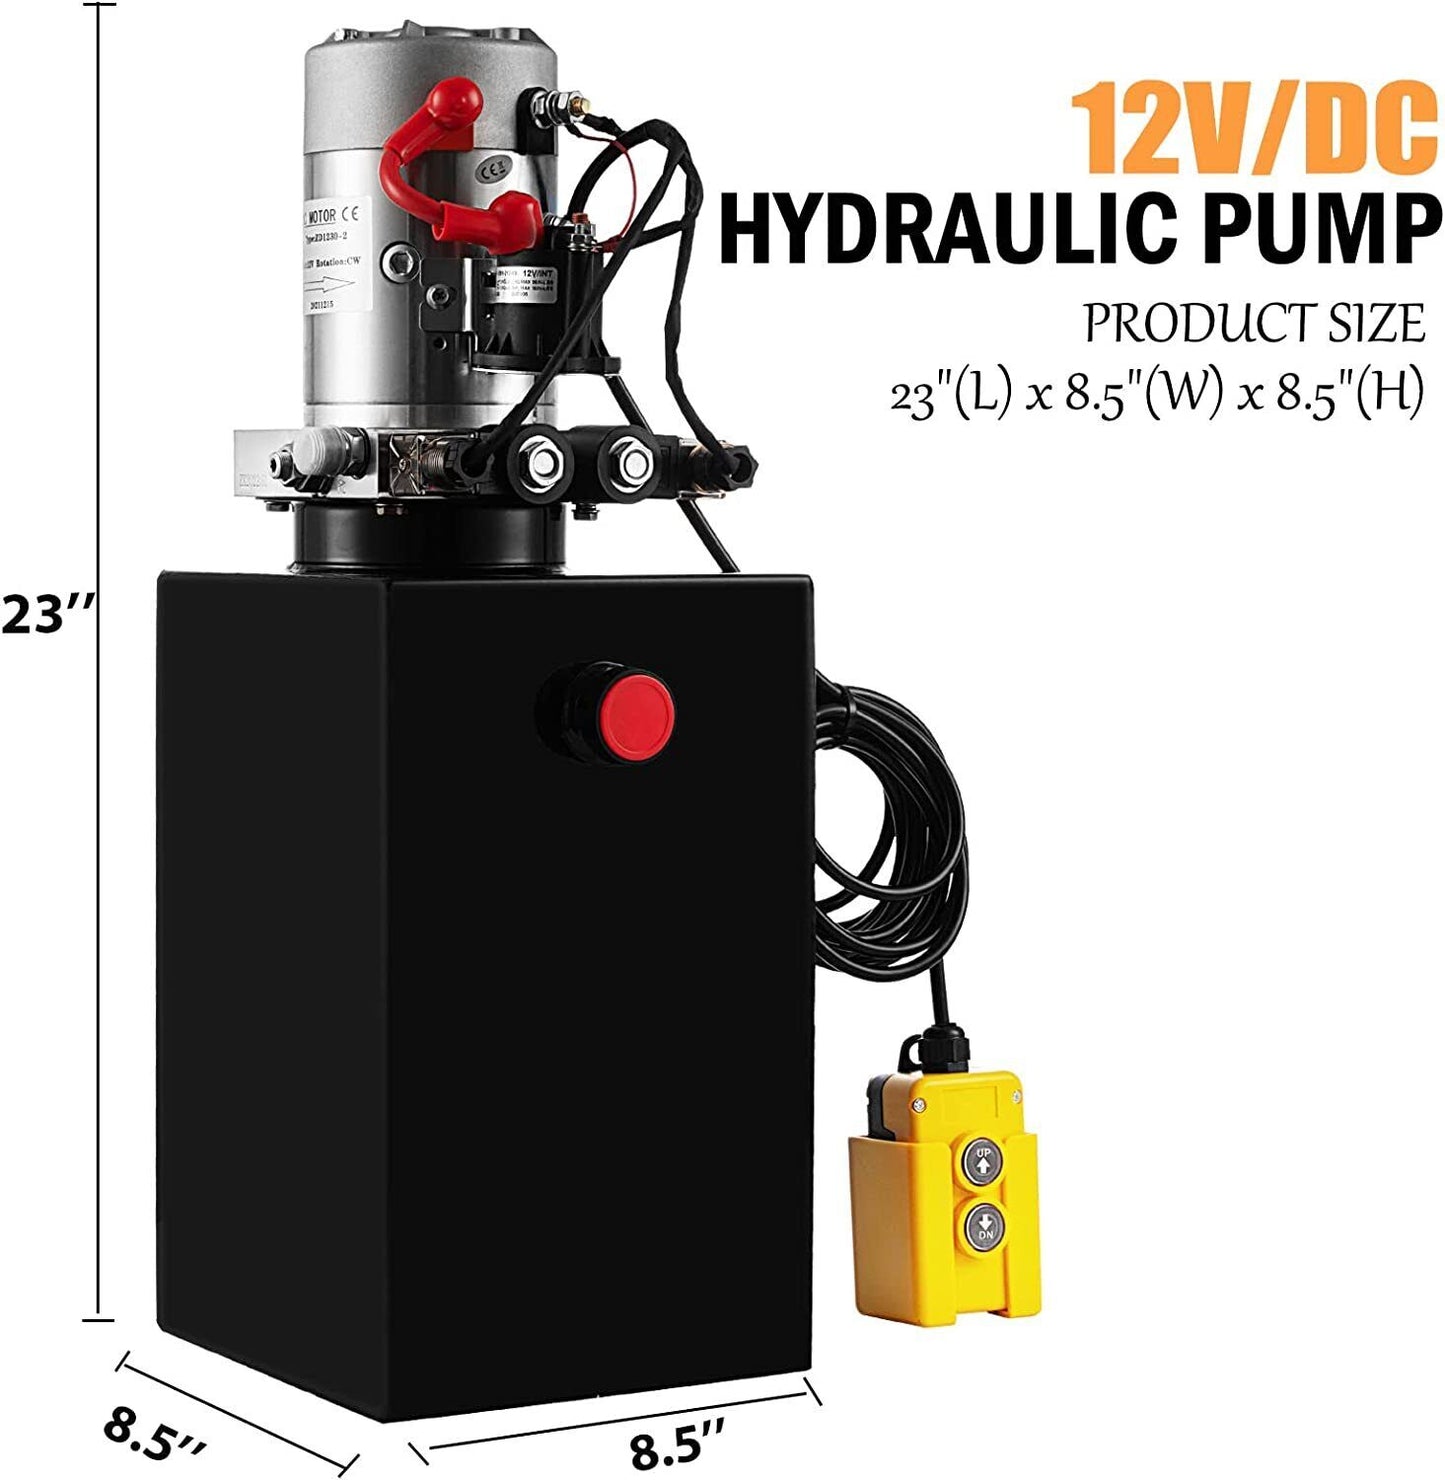 15 Quart Double-Acting Electric Hydraulic Pump DC 12V Power Unit Dump Trailer